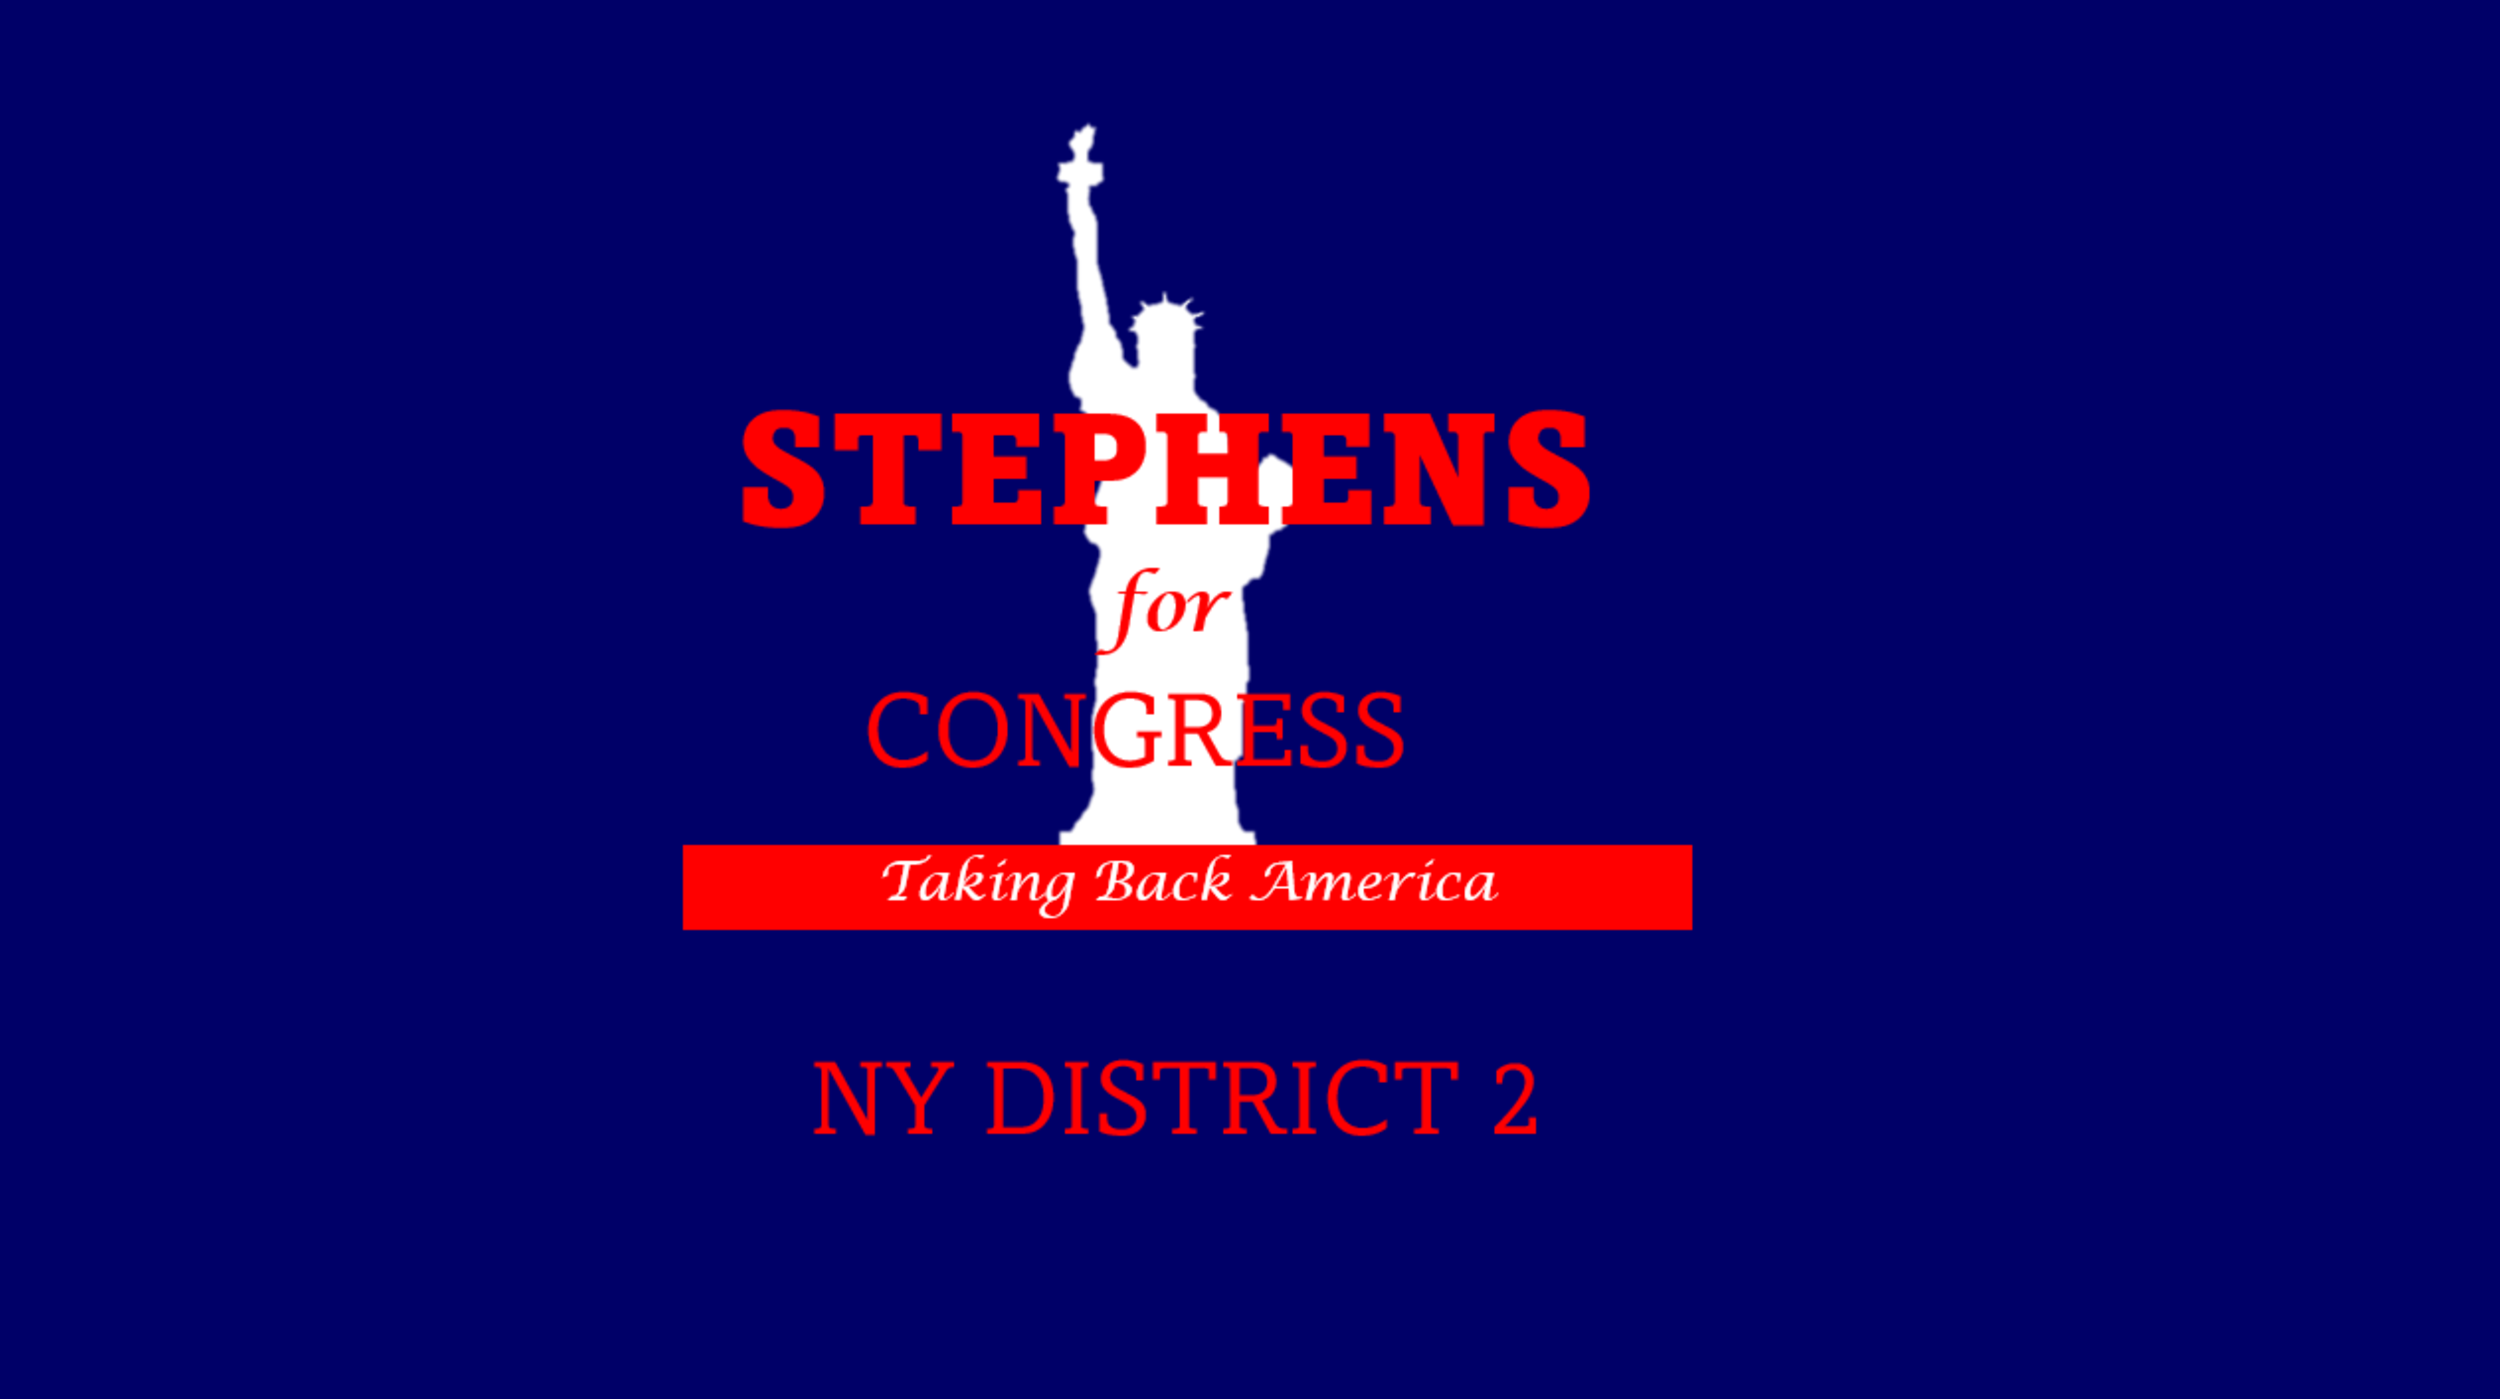 Shannon Stephens for Congress - Taking Back America